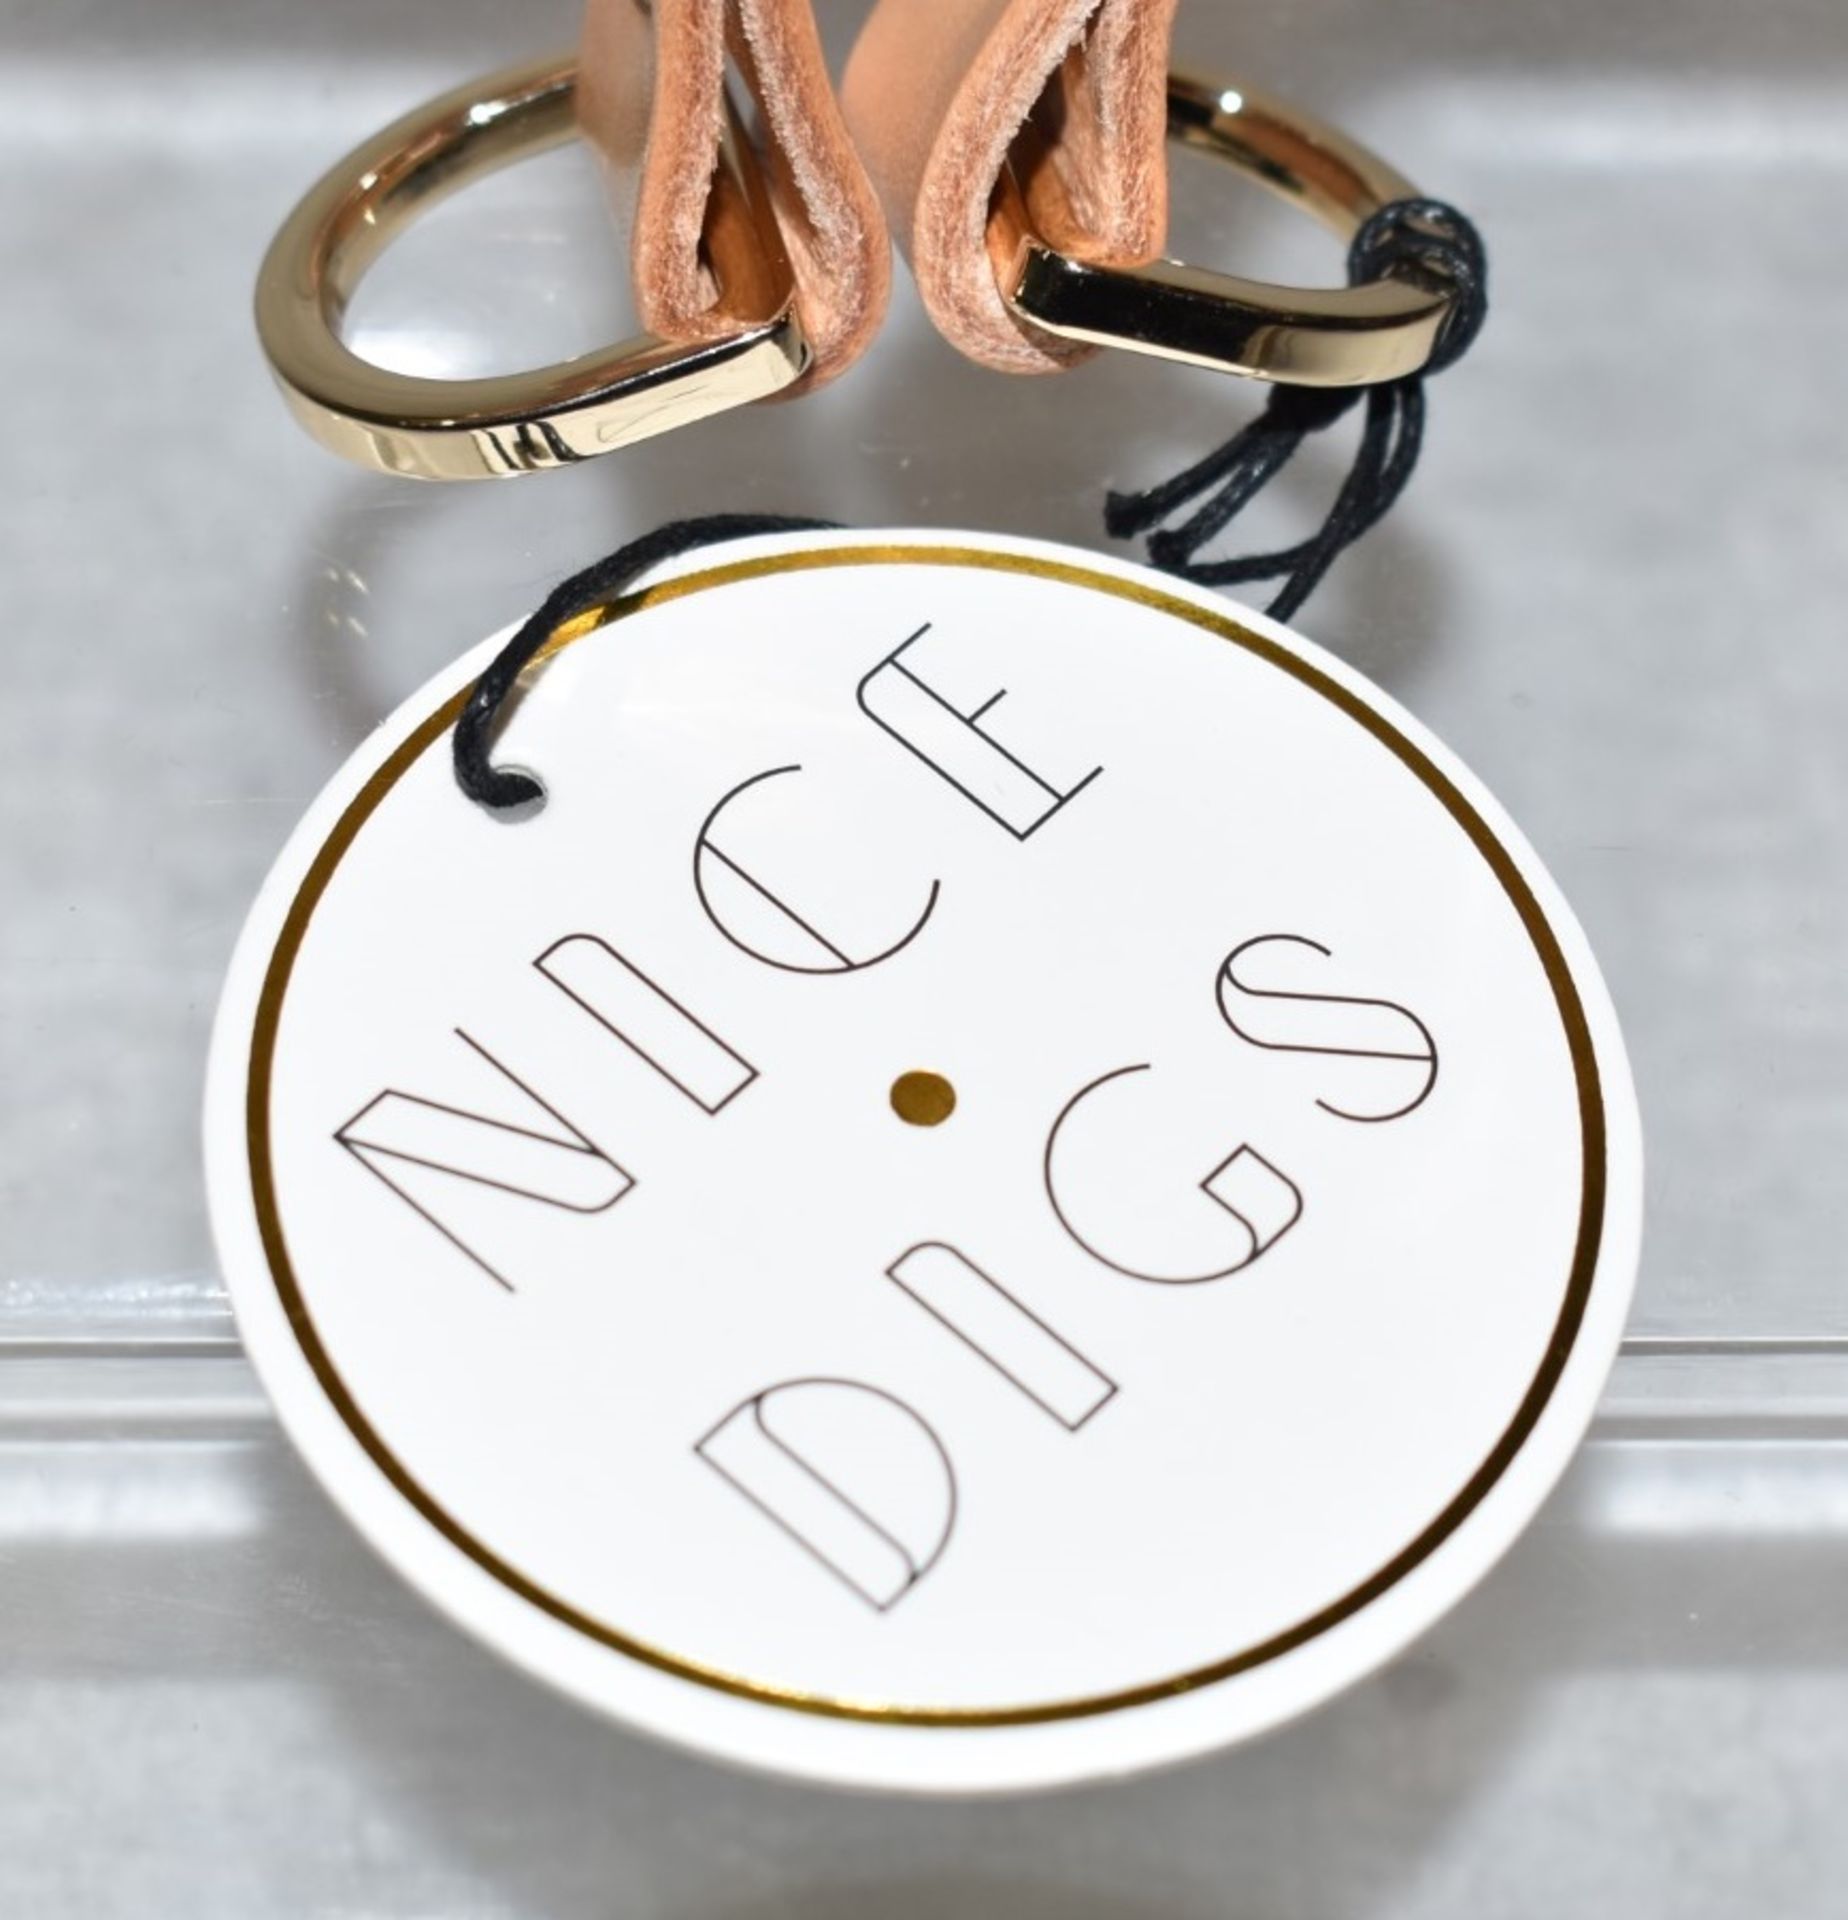 1 x NICE DIGS Spike Memphis Leather Dog Harness (Medium) - Original Price £67.95 - Image 4 of 6